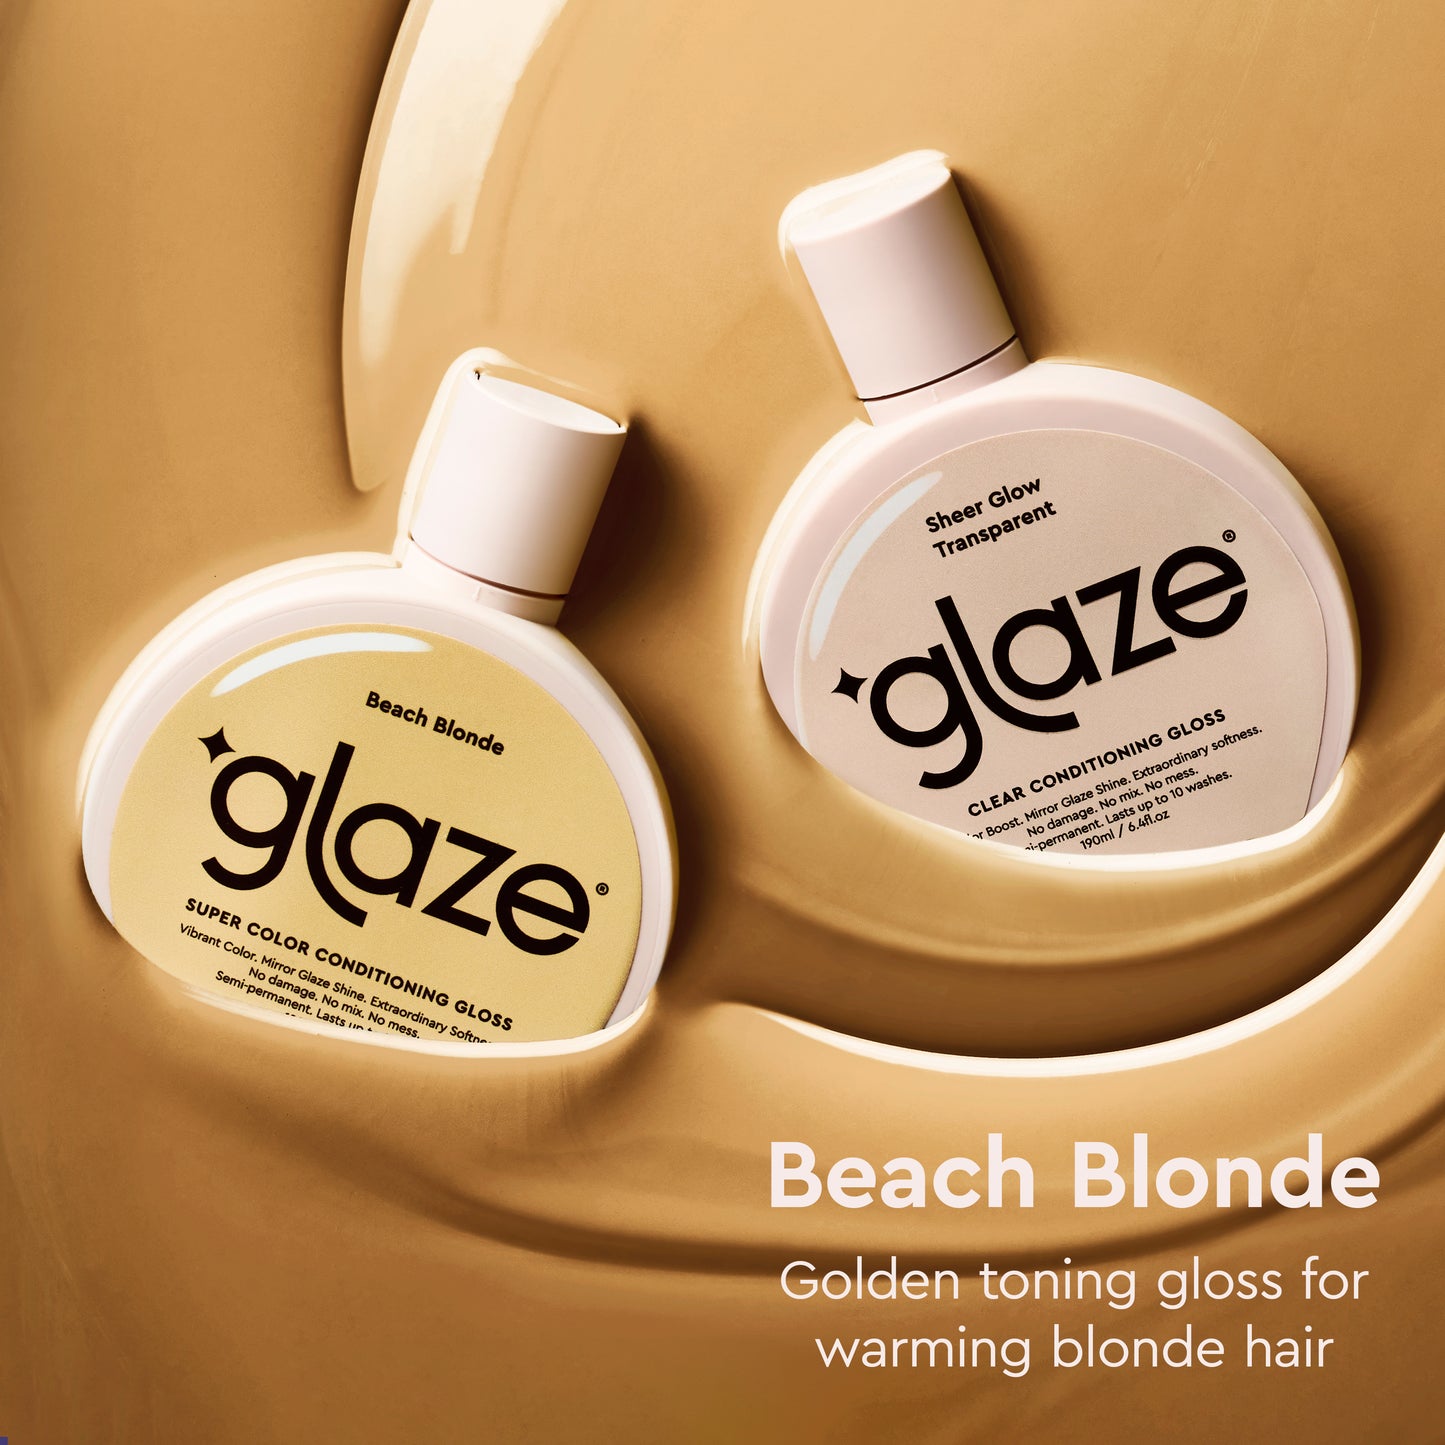 Super Gloss--Beach Blonde